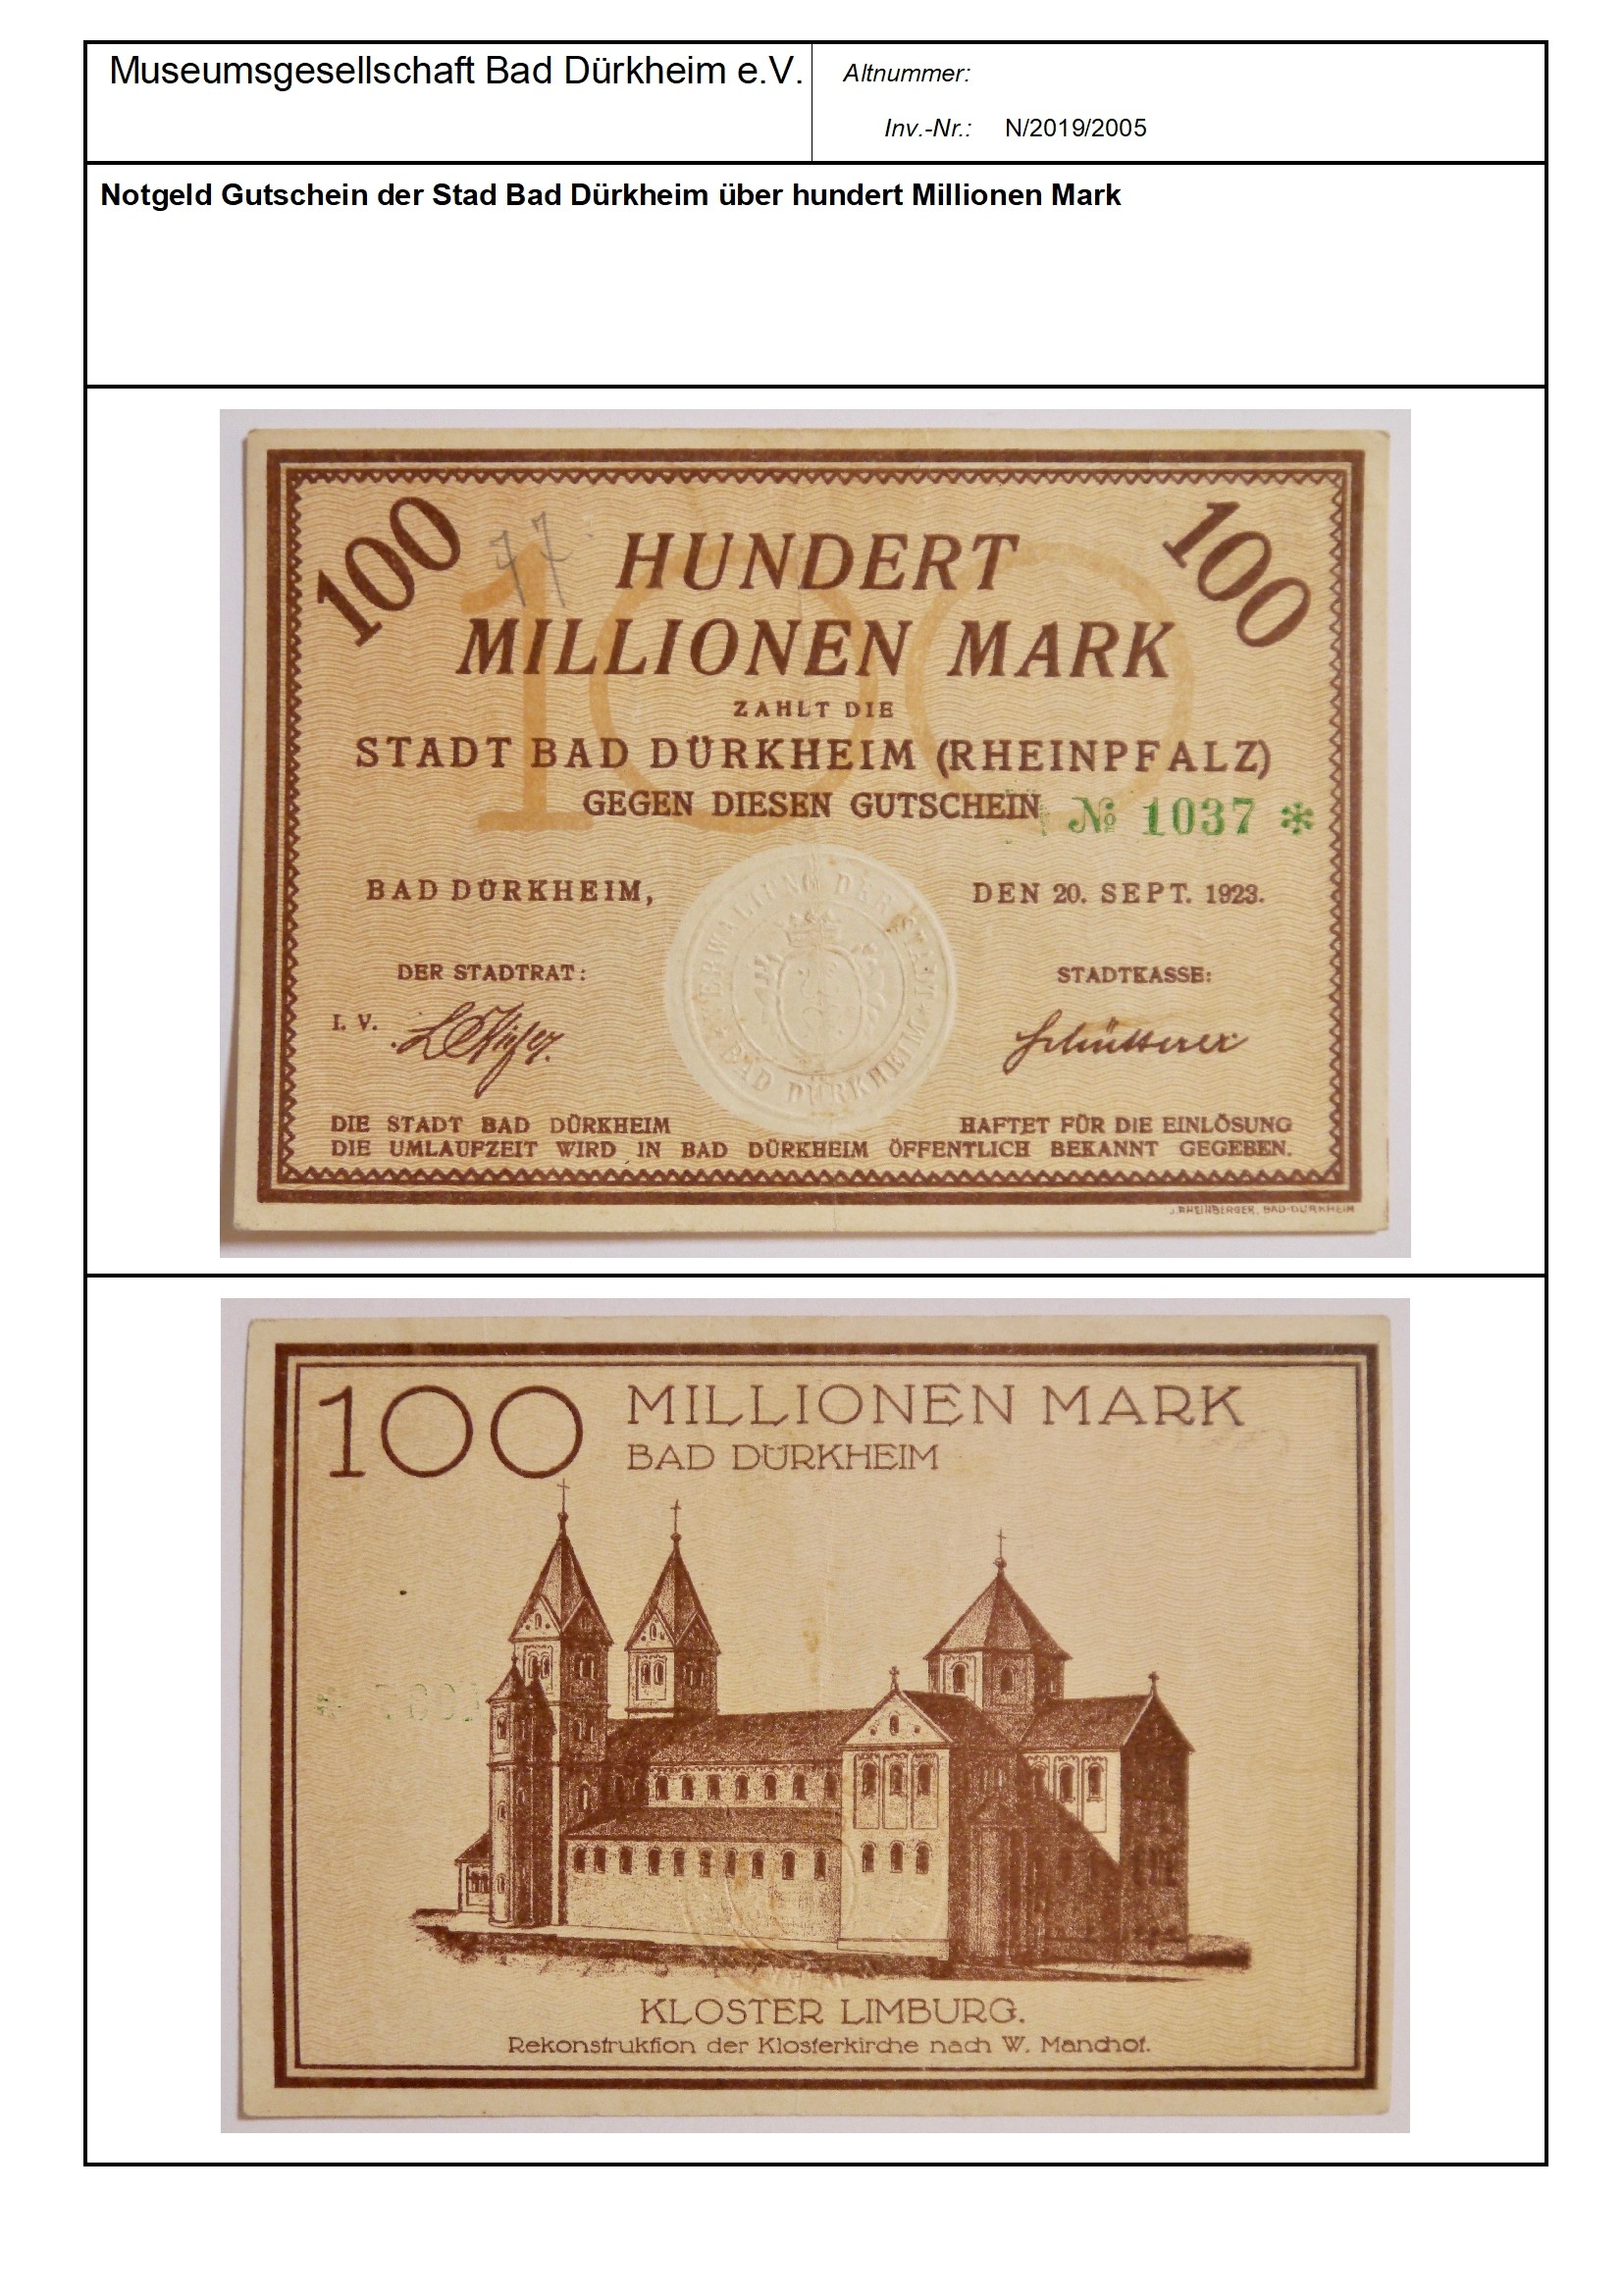 Notgeld Gutschein der Stad Bad Dürkheim über hundert Millionen Mark
Serien-Nummer: (Museumsgesellschaft Bad Dürkheim e.V. CC BY-NC-SA)